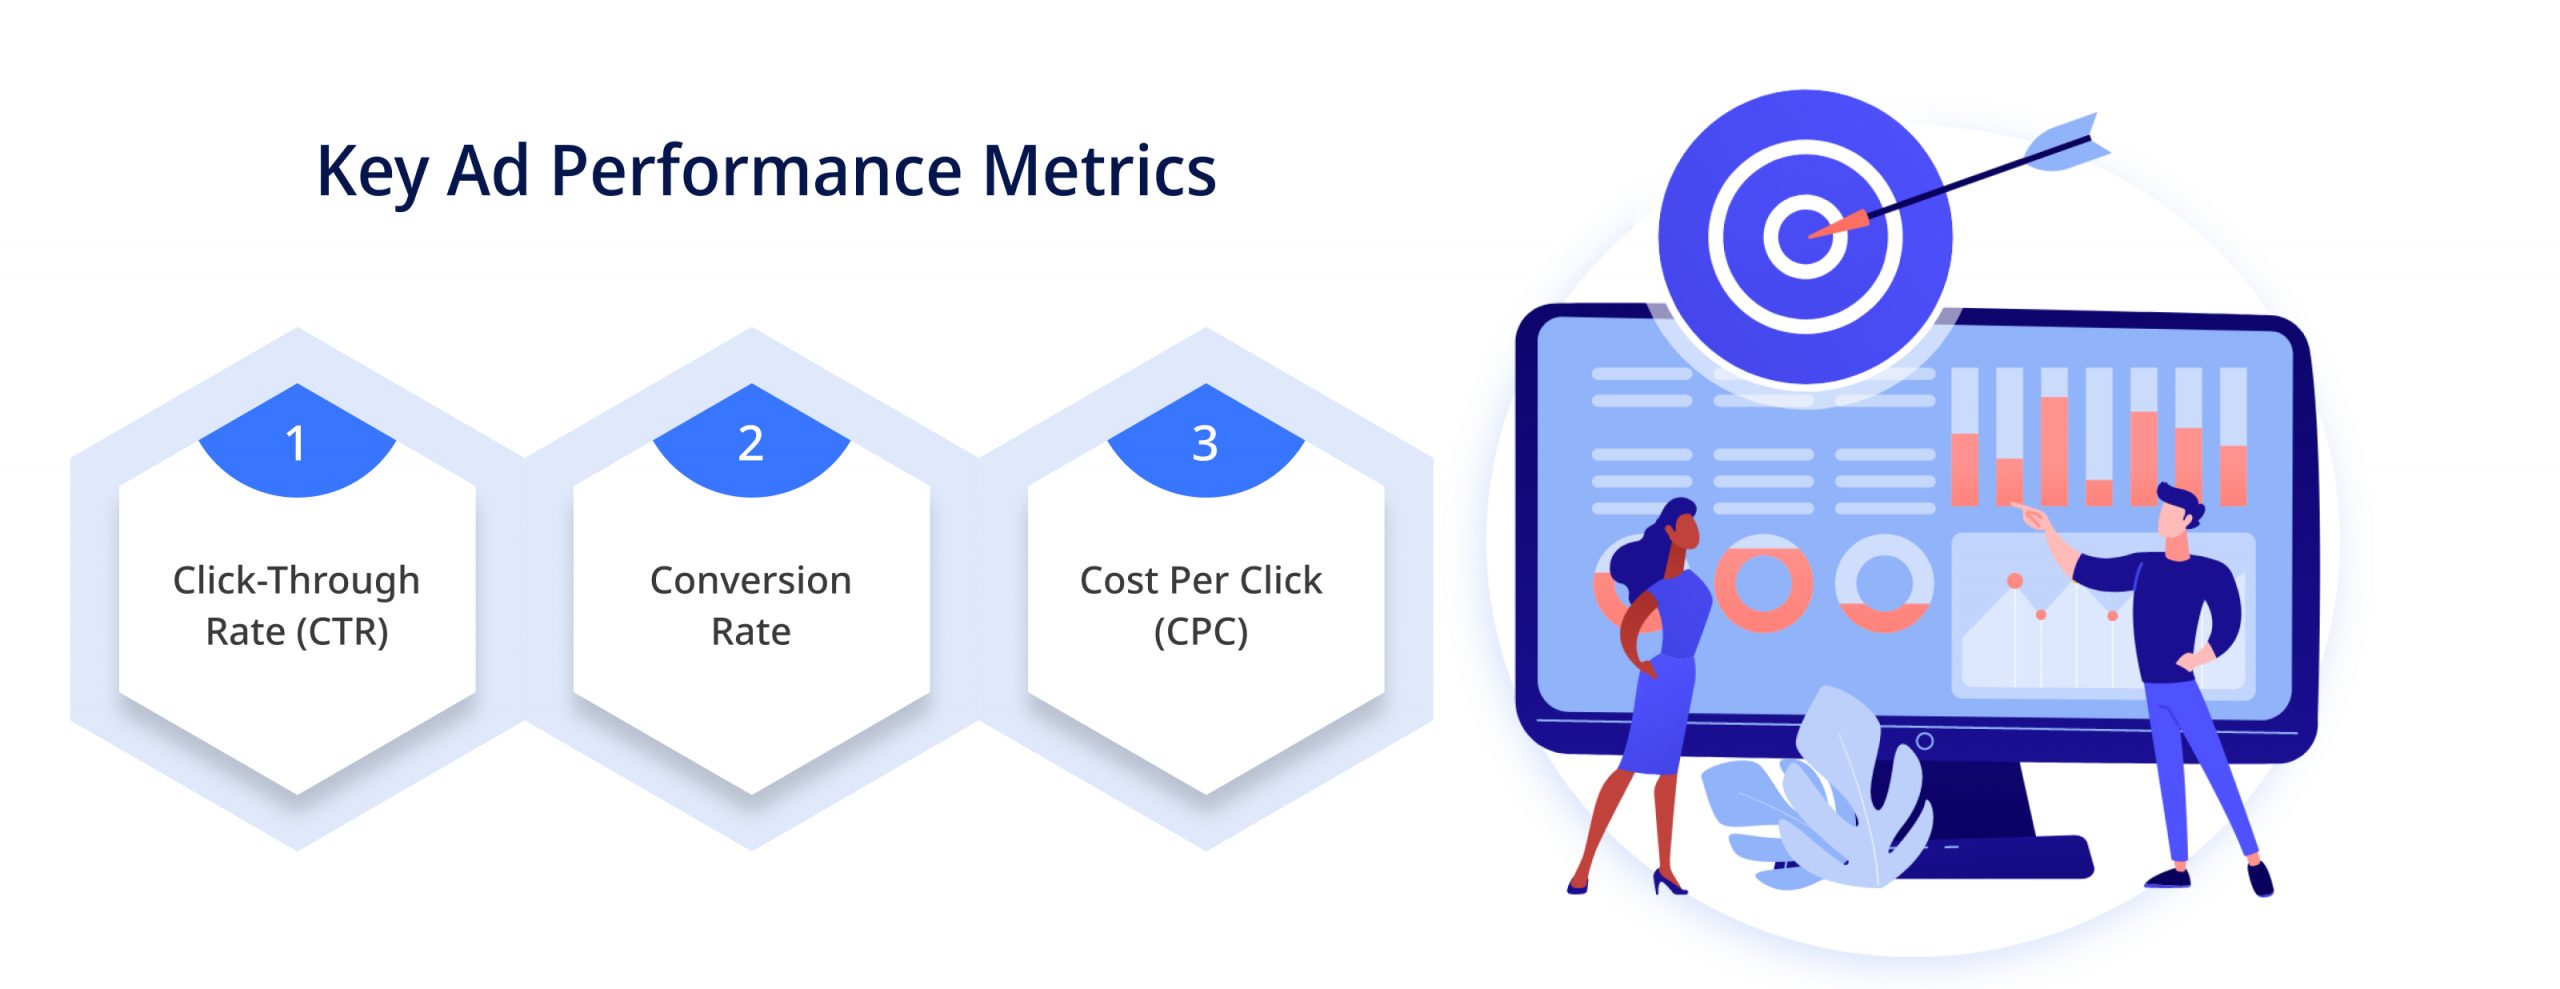 Key Ad Performance Metrics